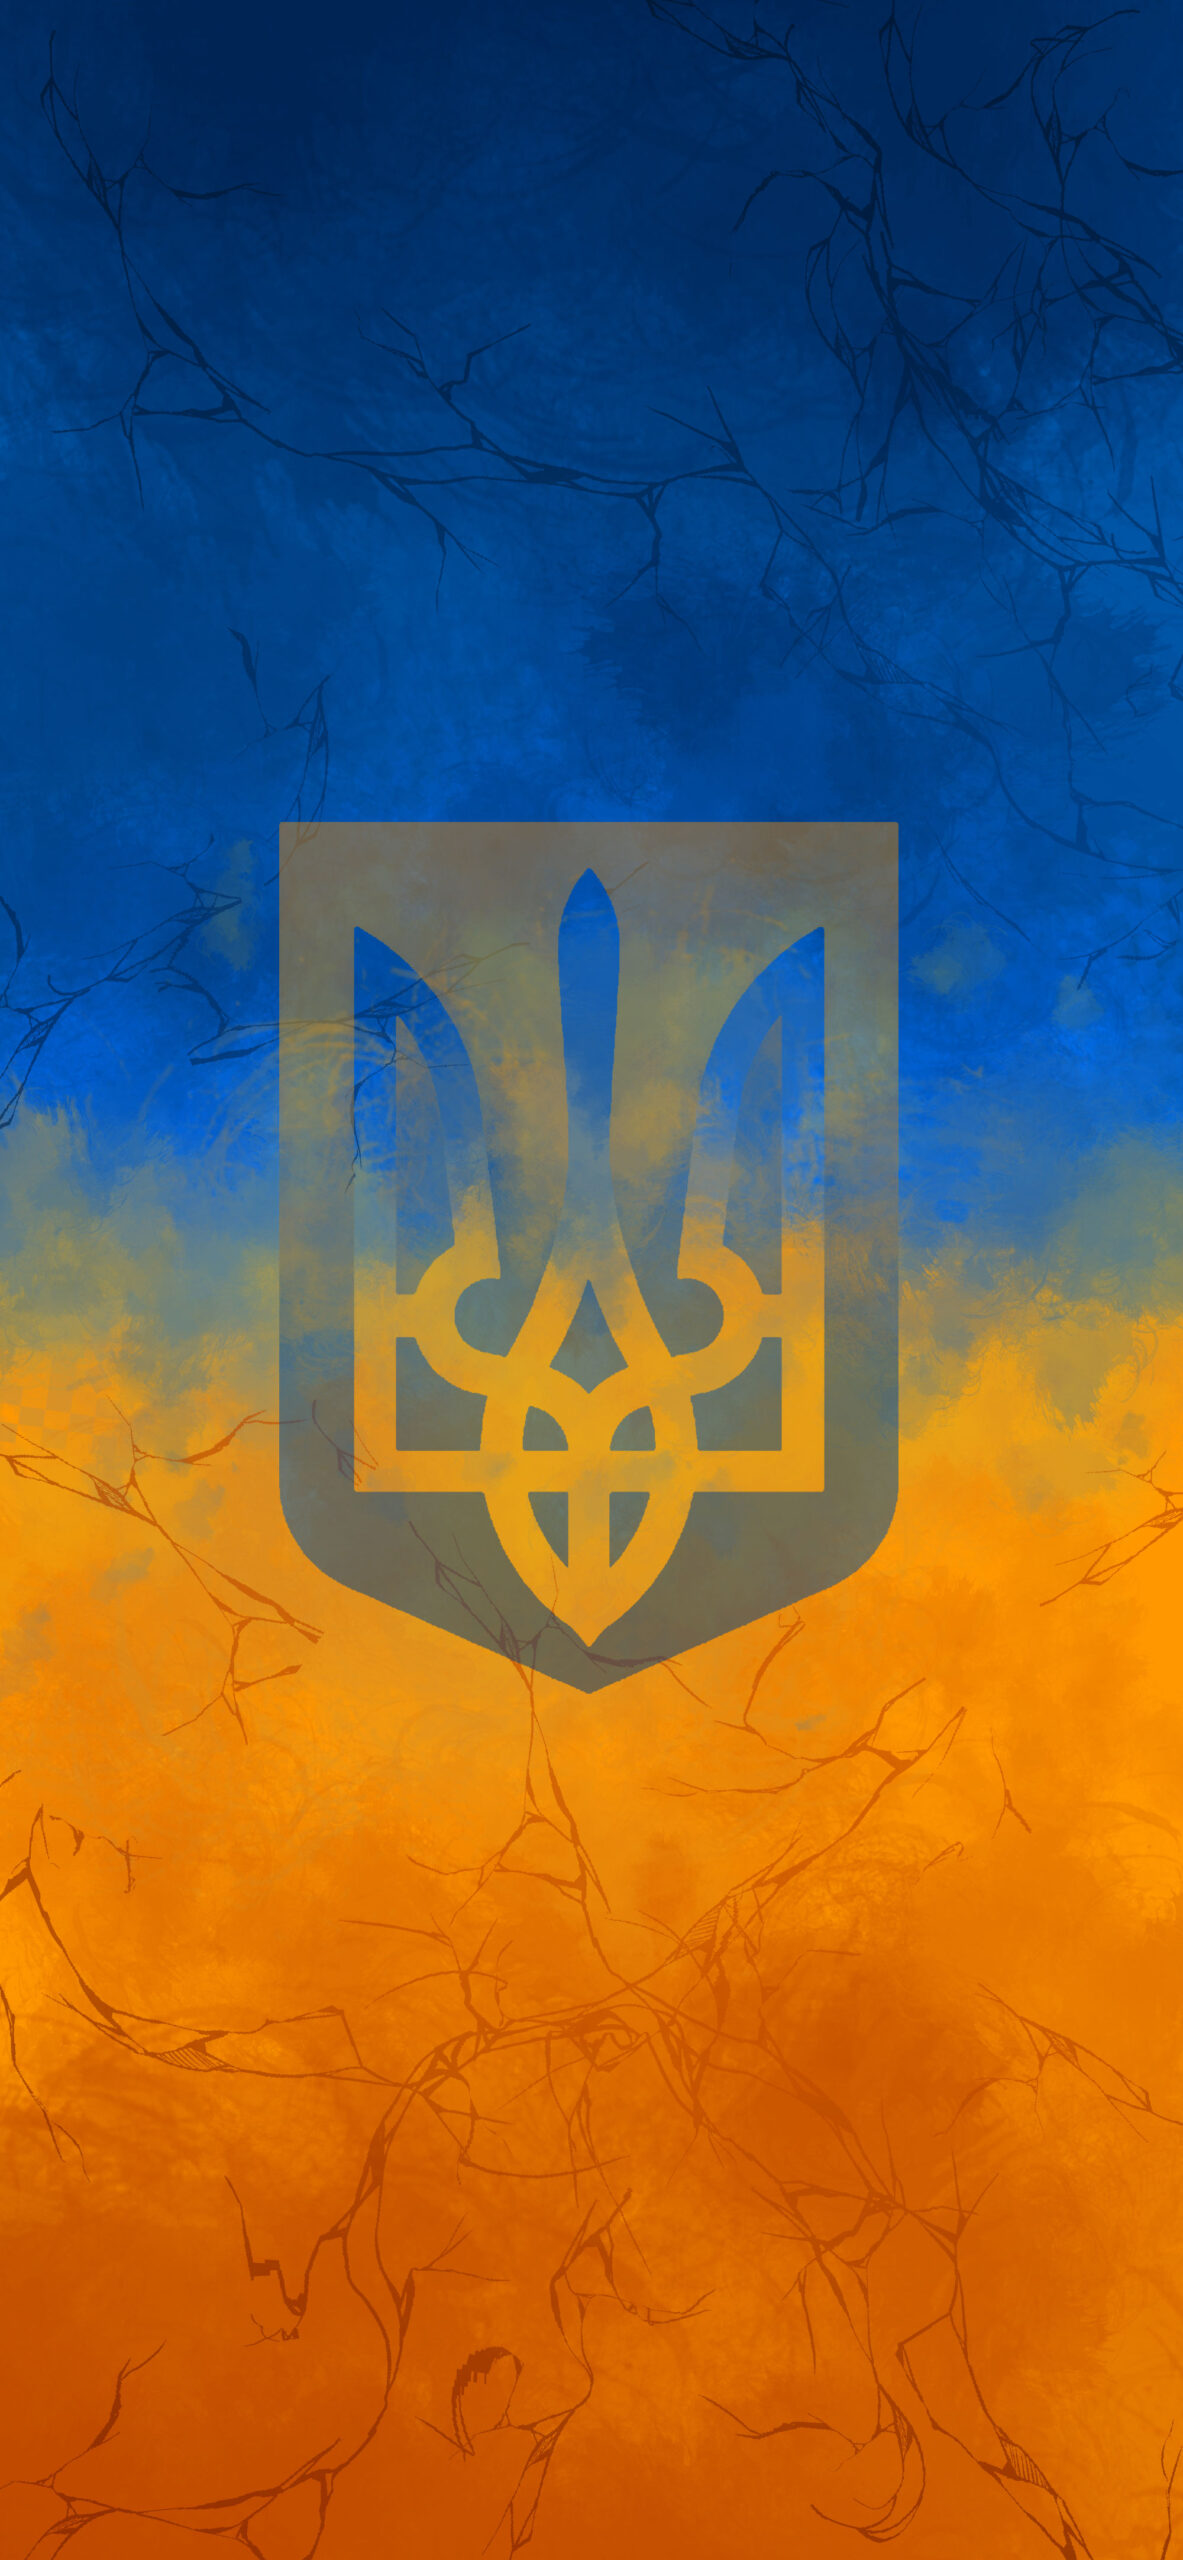 ukraine state emblem background